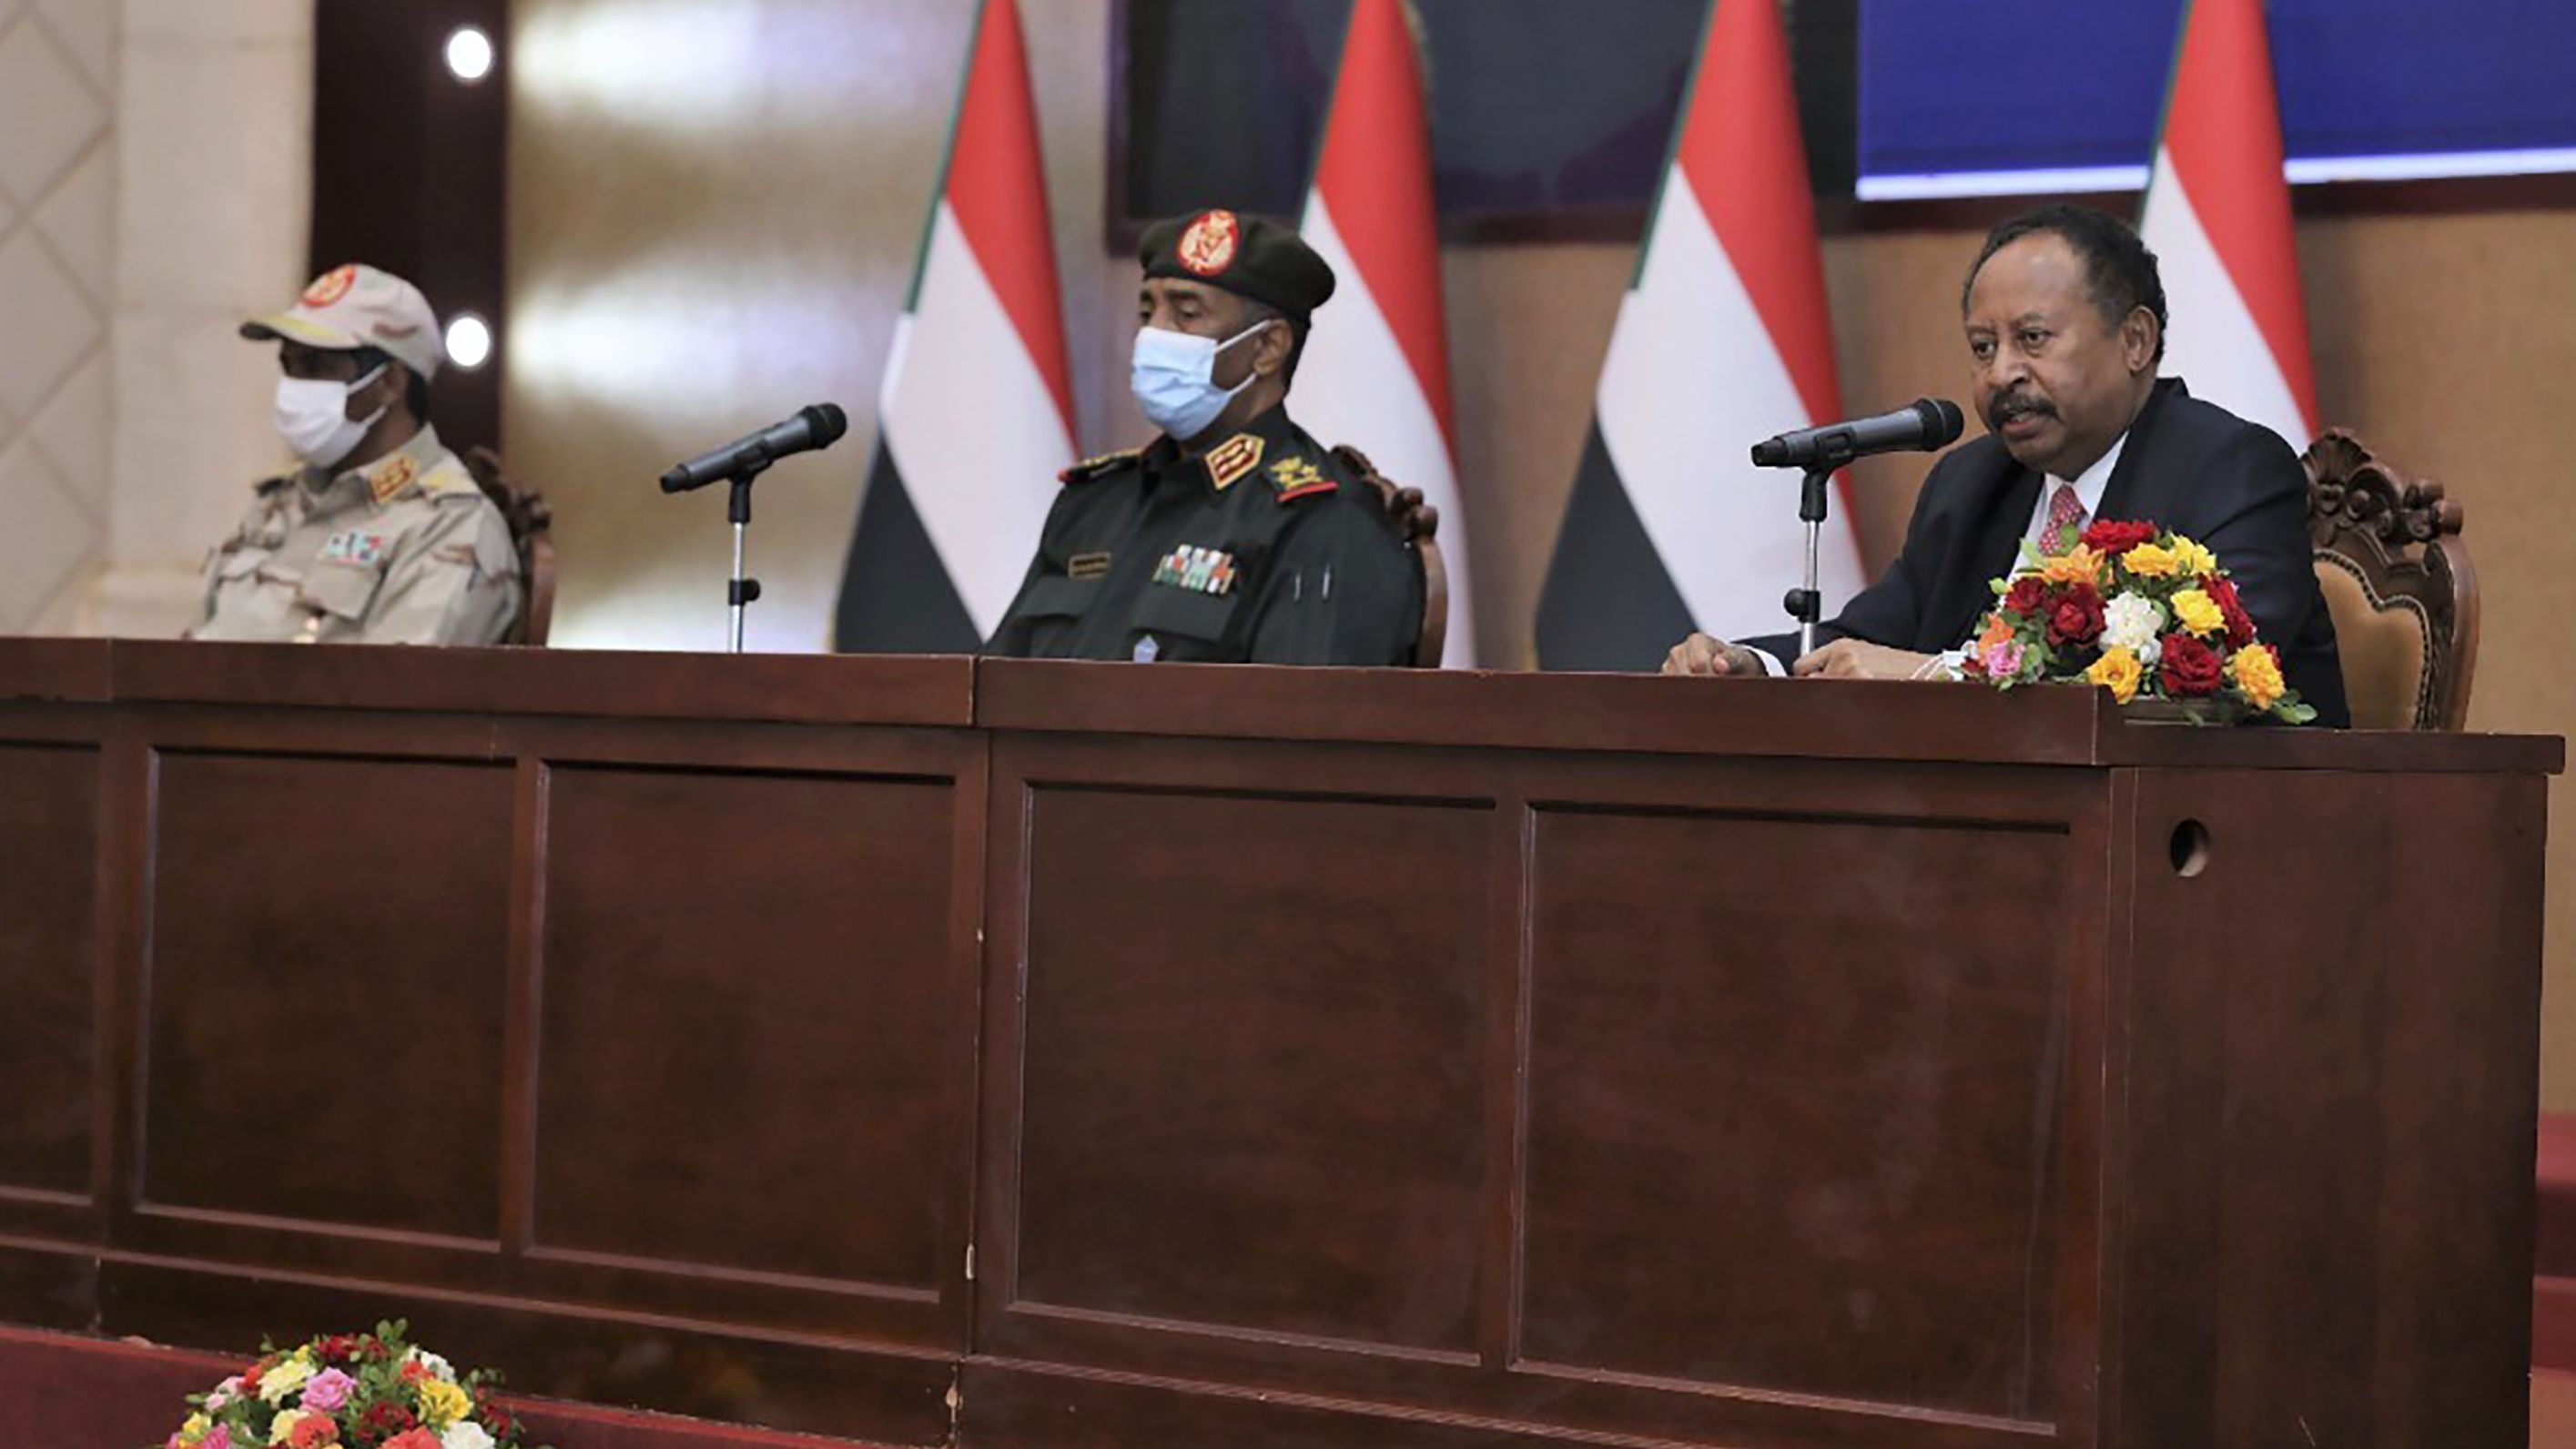 Prime Minister Abdalla Hamdok sits next to Sudan's top general, Abdel Fattah Al-Burhan, as he speaks at a ceremony that reinstated him in Khartoum, Sudan, on November 21, 2021.